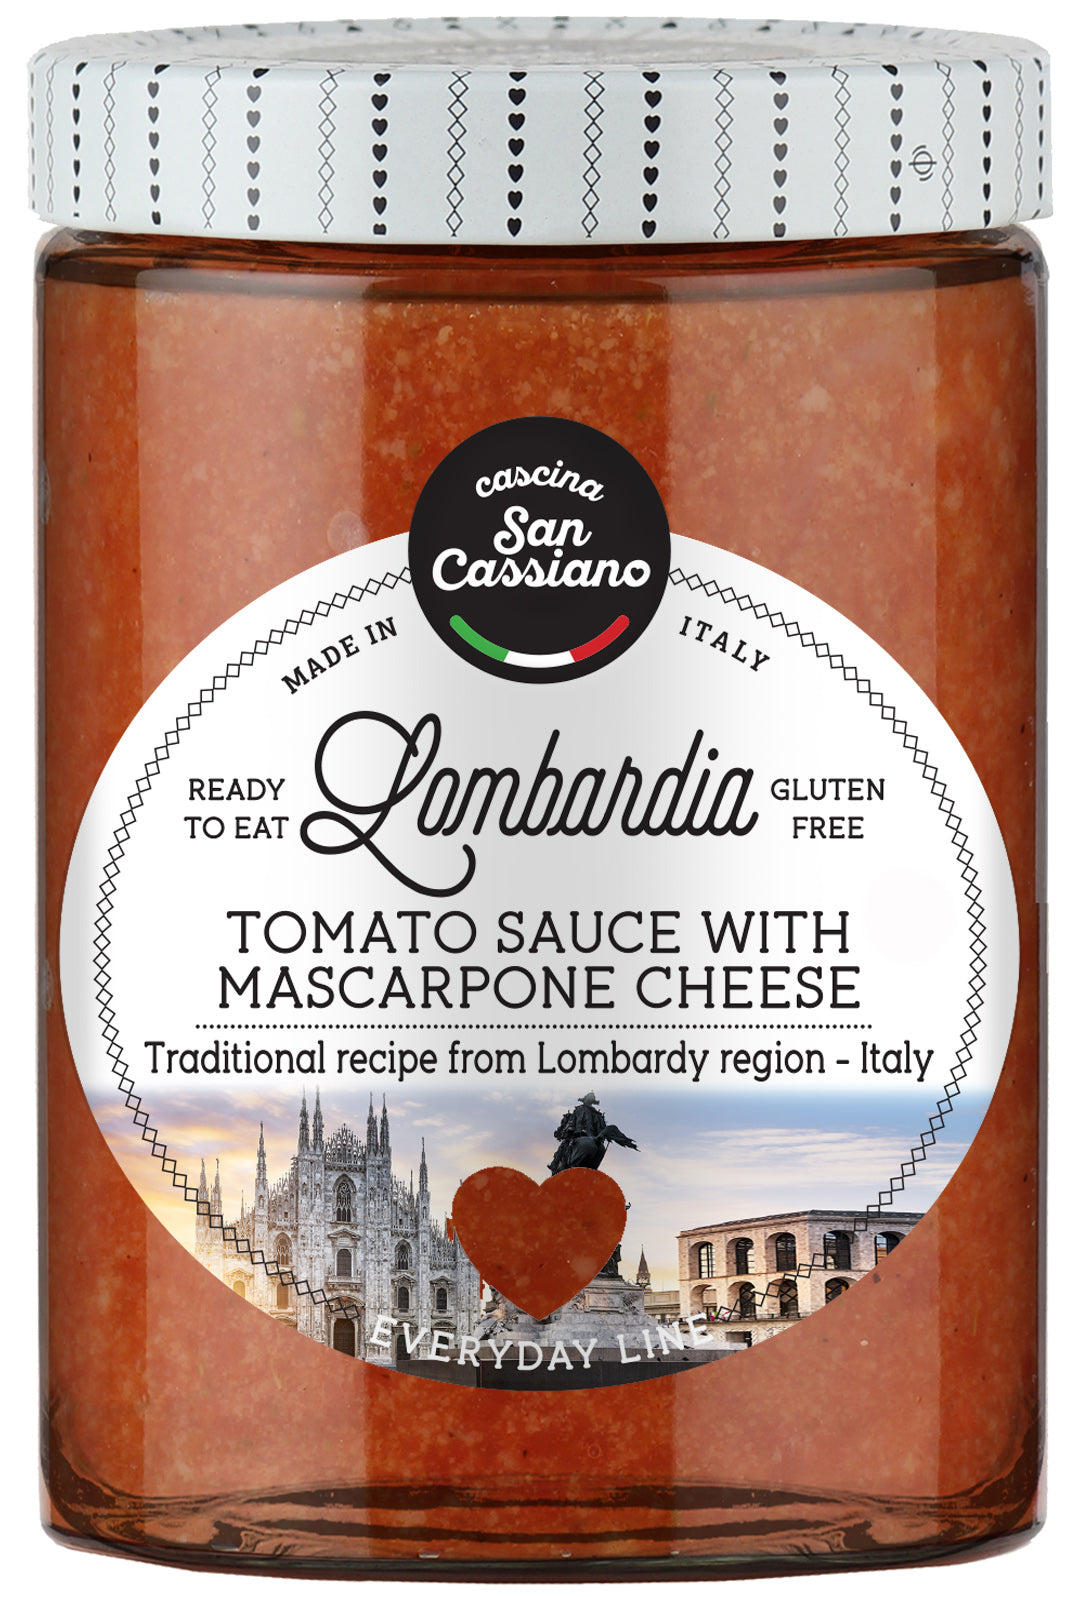 Lombardia sauce - Tomato sauce with mascarpone cheese